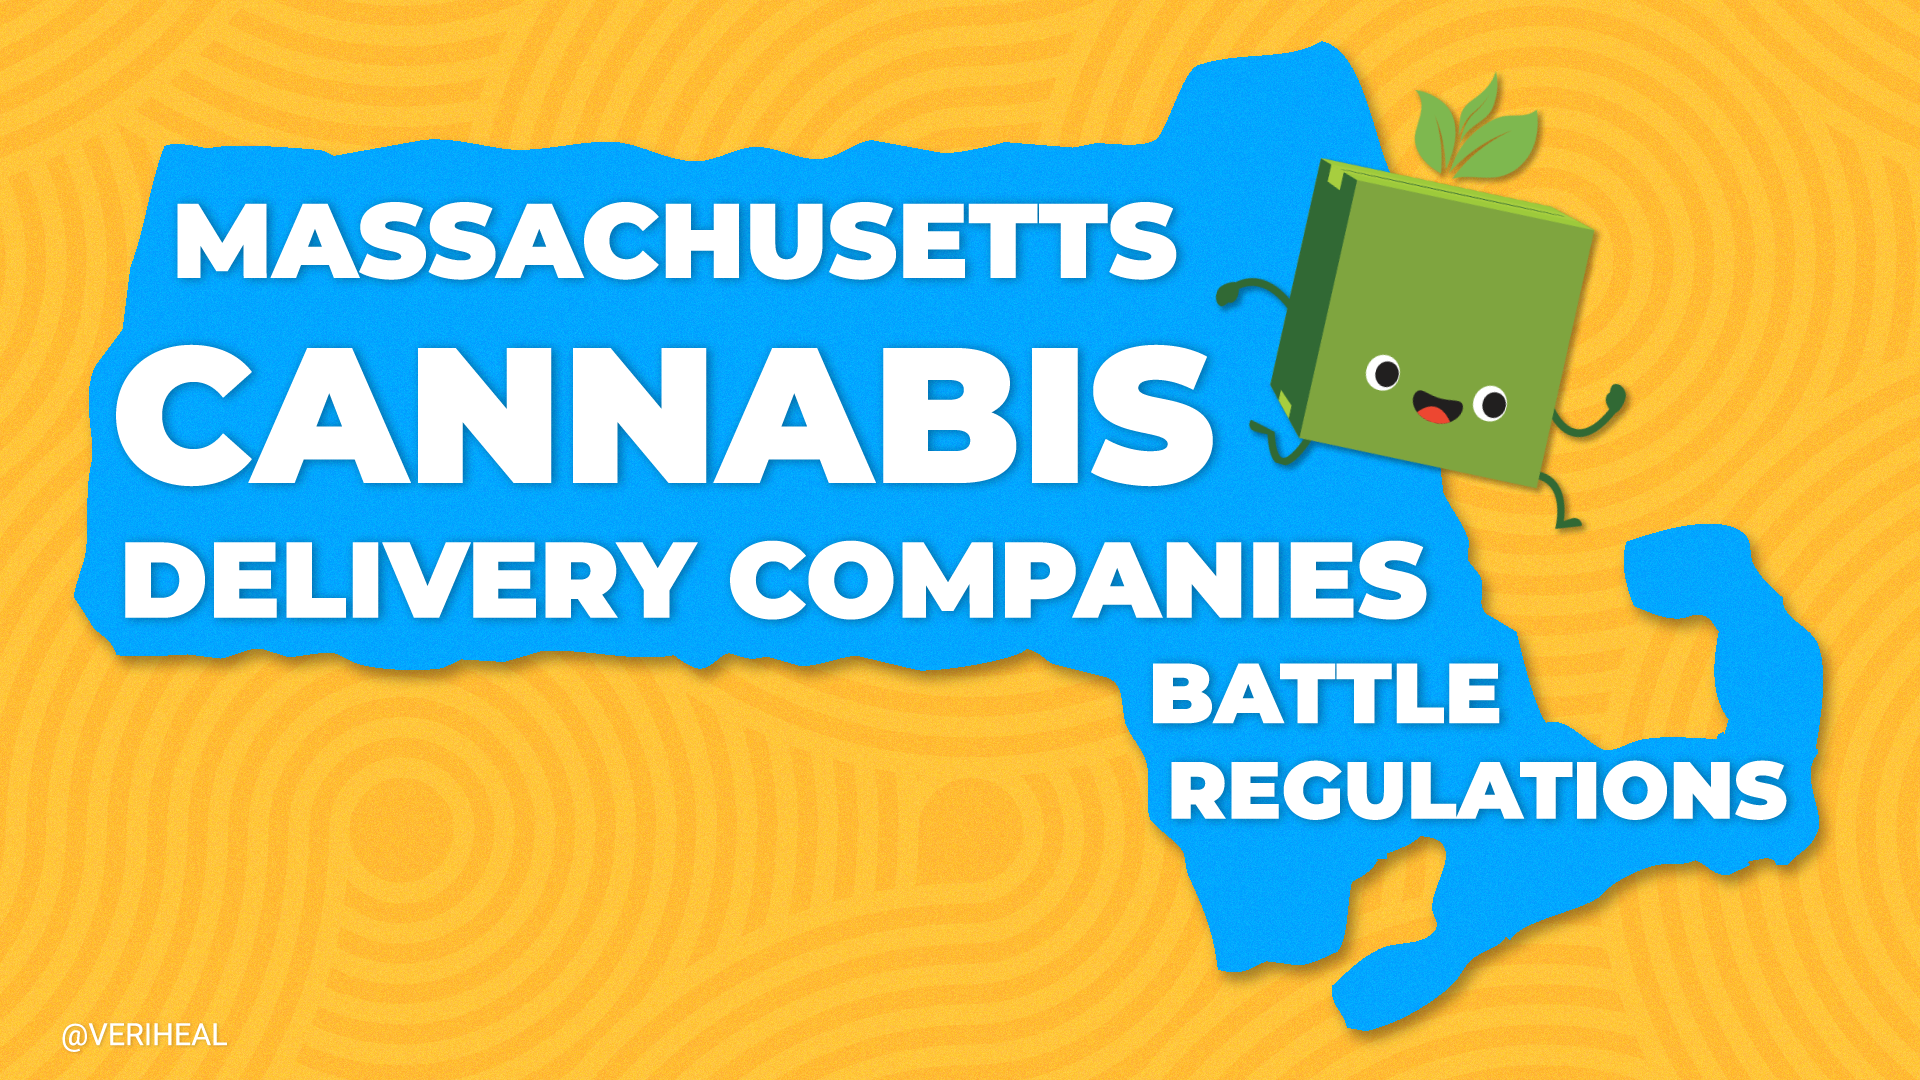 Massachusetts Cannabis Delivery Companies Battle Regulations